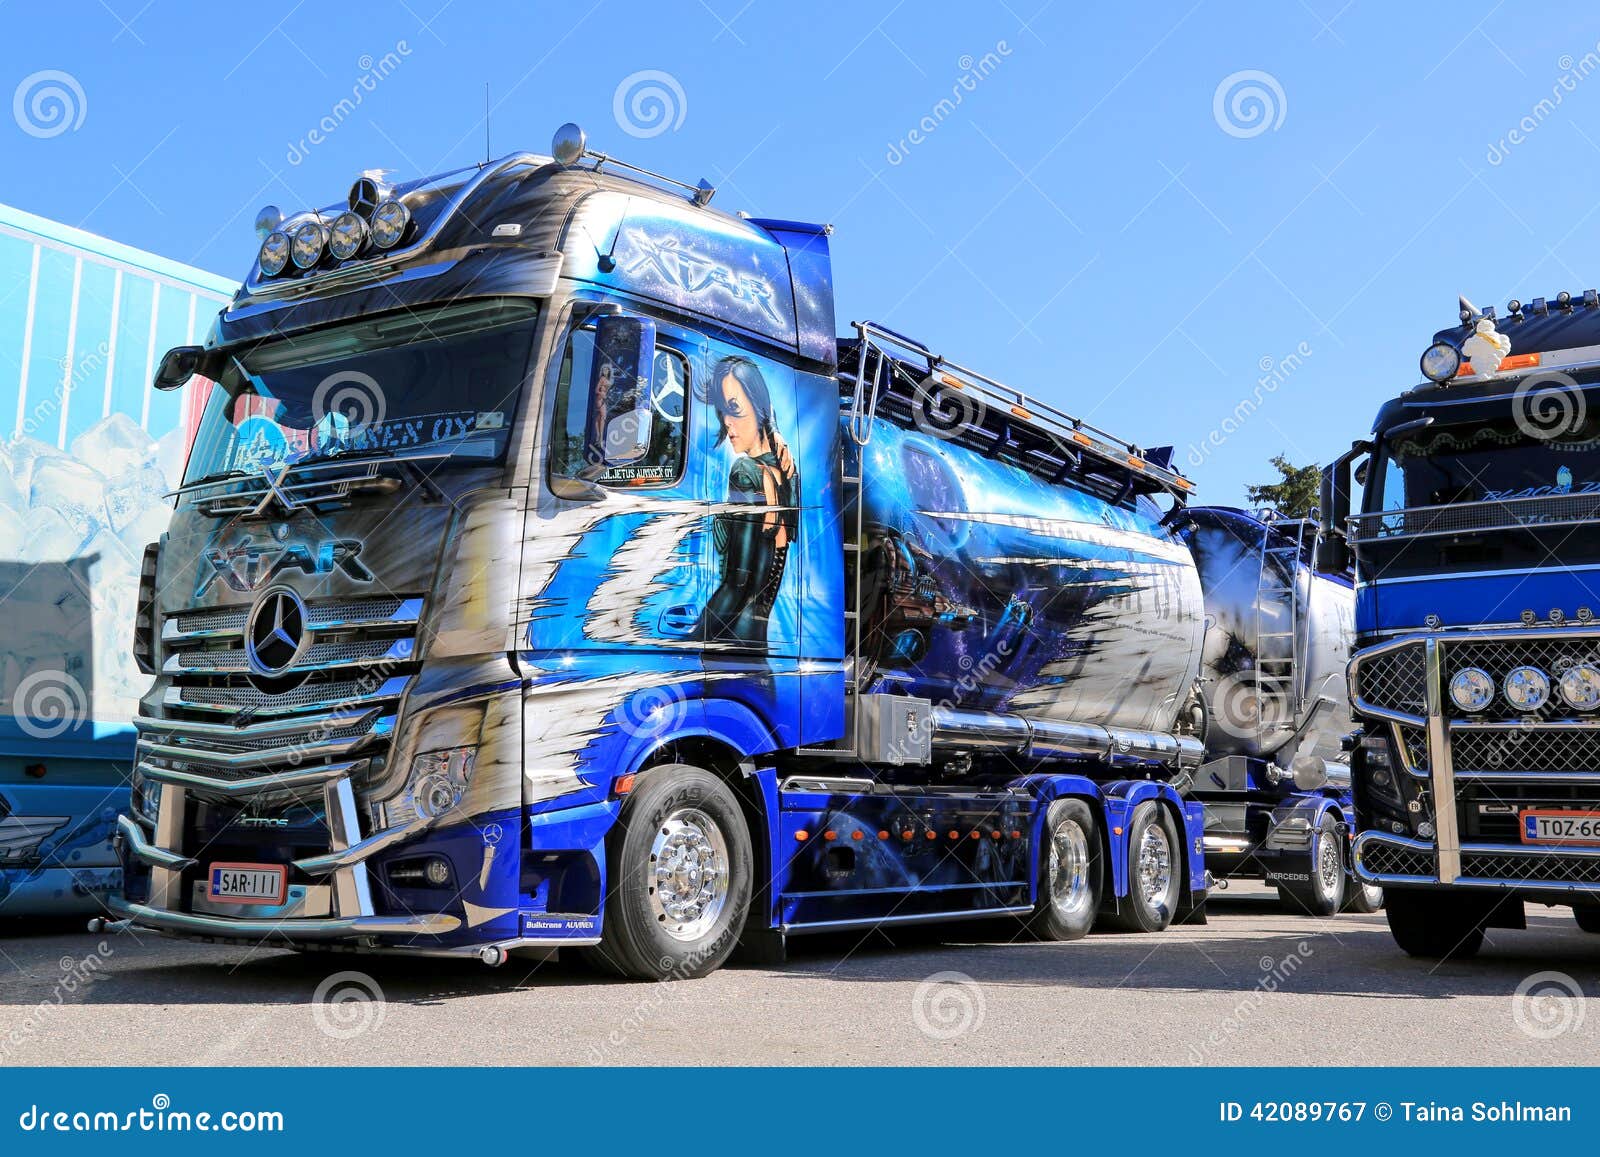 Used mercedes trucks in finland